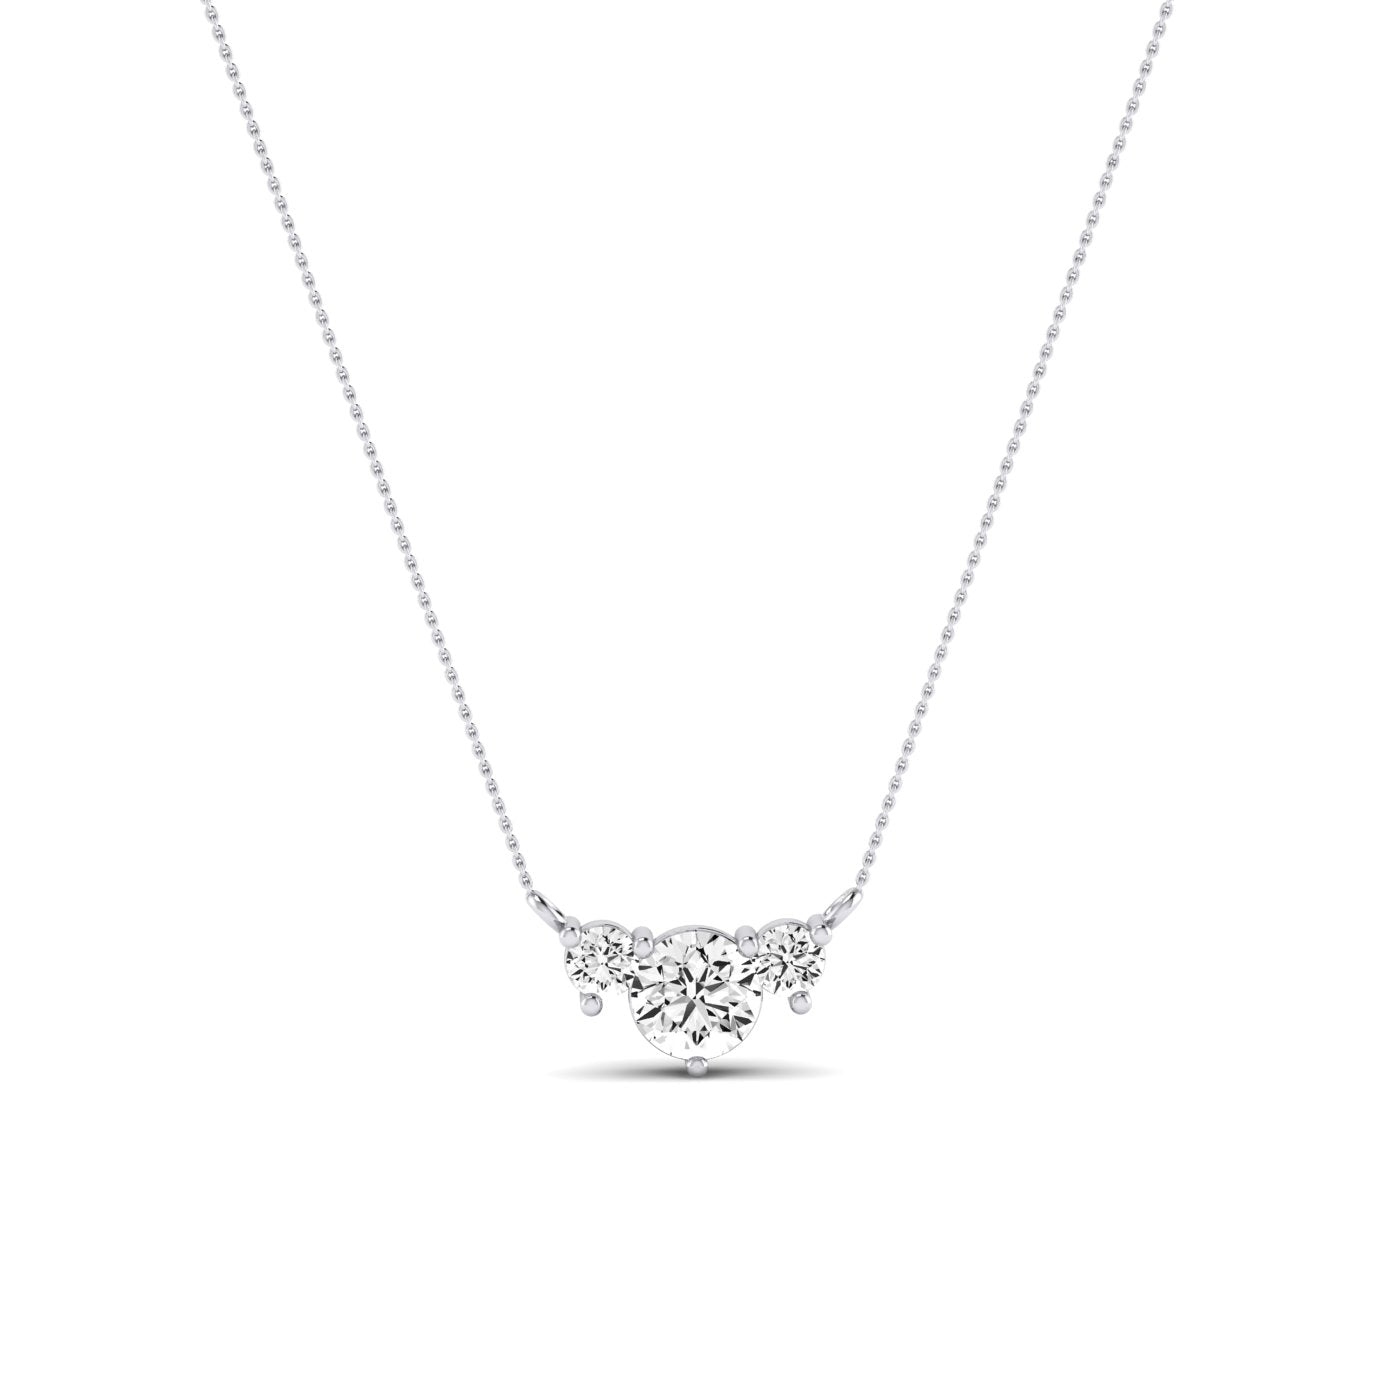 Spirea Round Cut Diamond Accented Necklace (Clarity Enhanced) whitegold